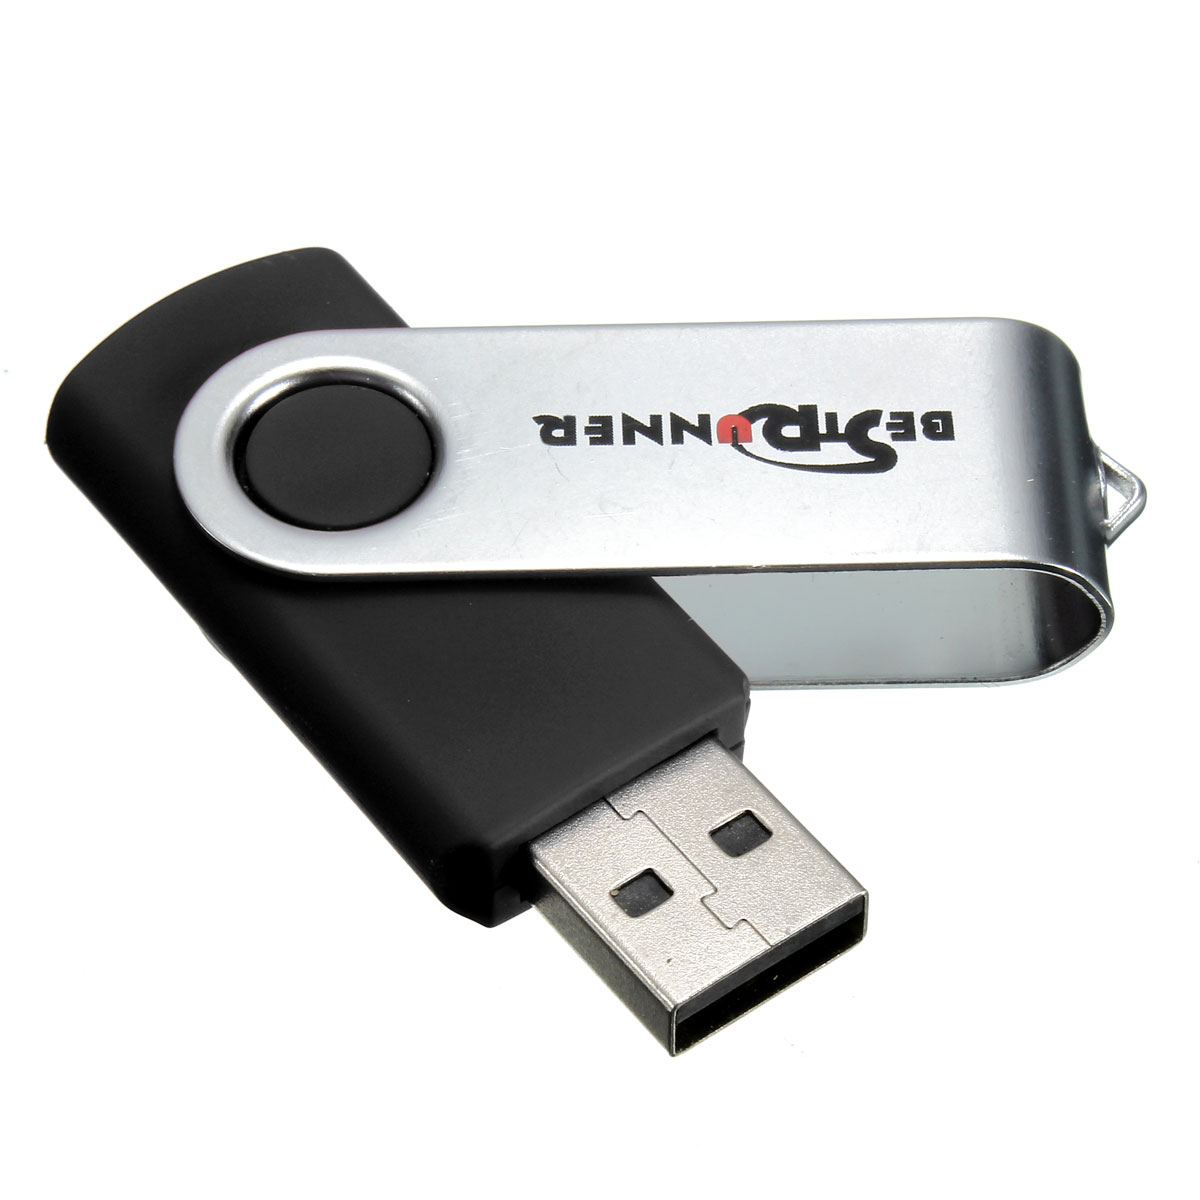 Bestrunner 8GB Foldable USB 2.0 Flash Drive Thumbstick Pen Drive Memory U Disk 26